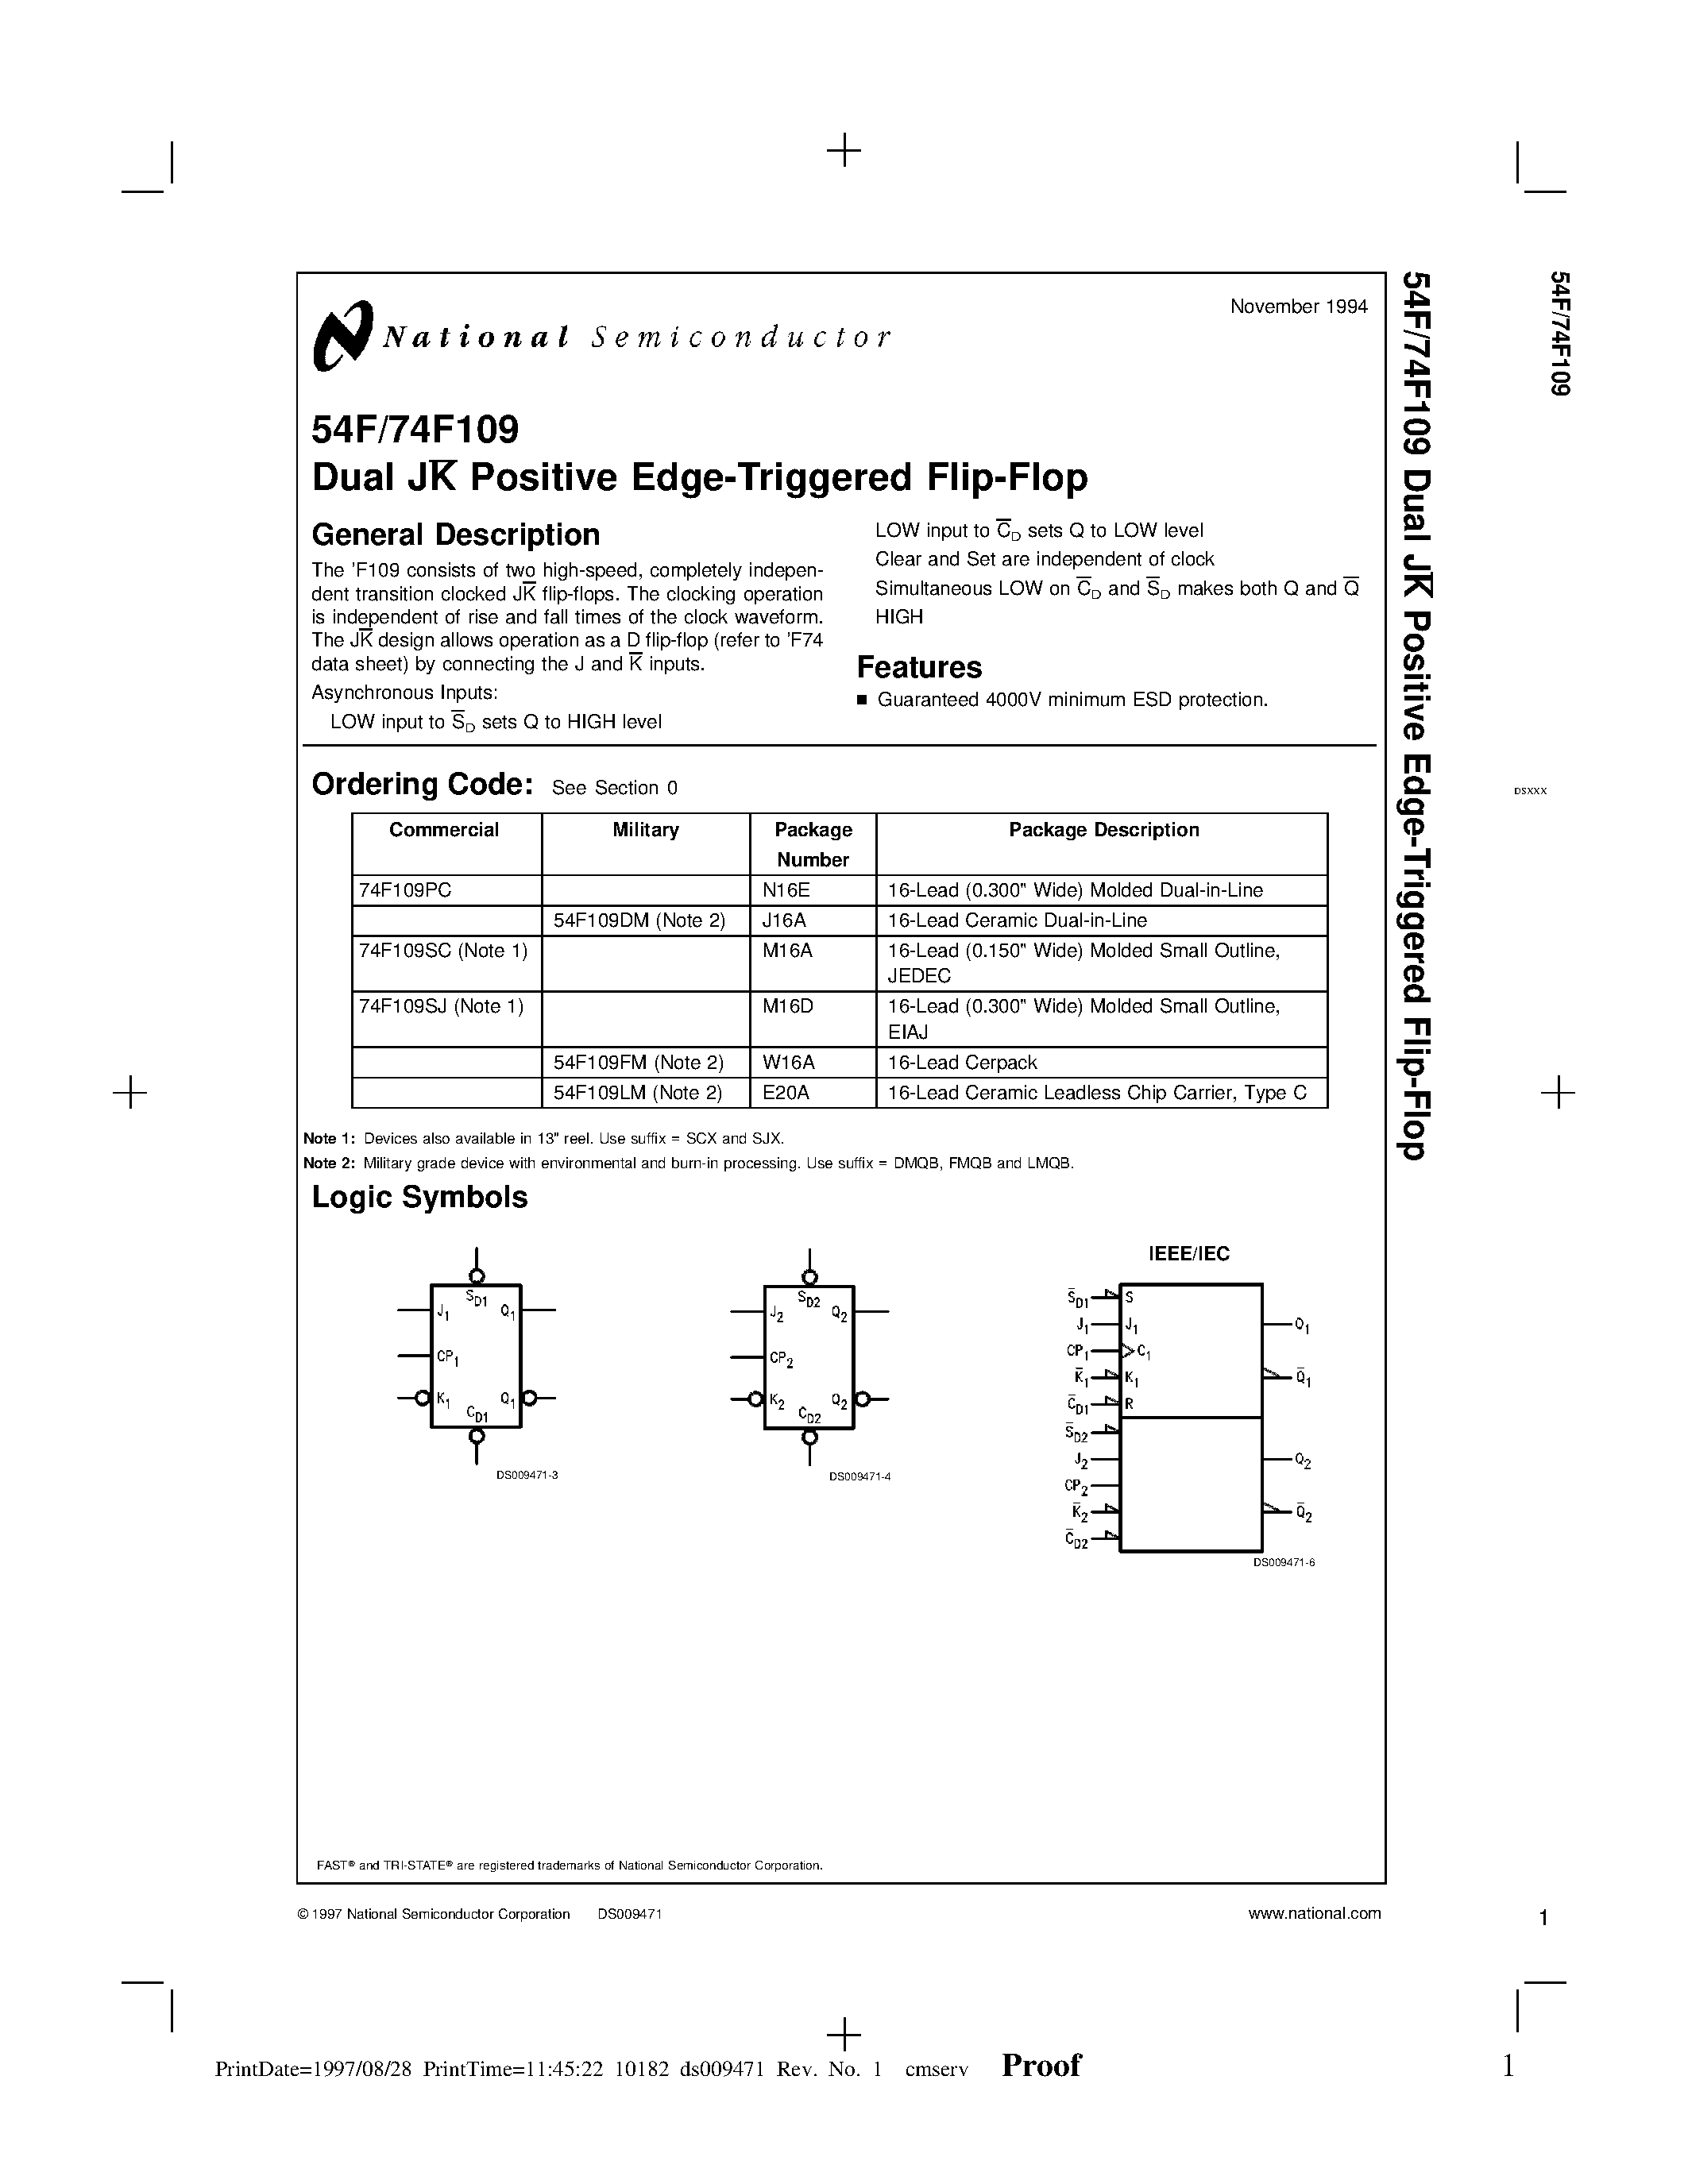 Datasheet 74F109PC - Dual JK Positive Edge-Triggered Flip-Flop page 1